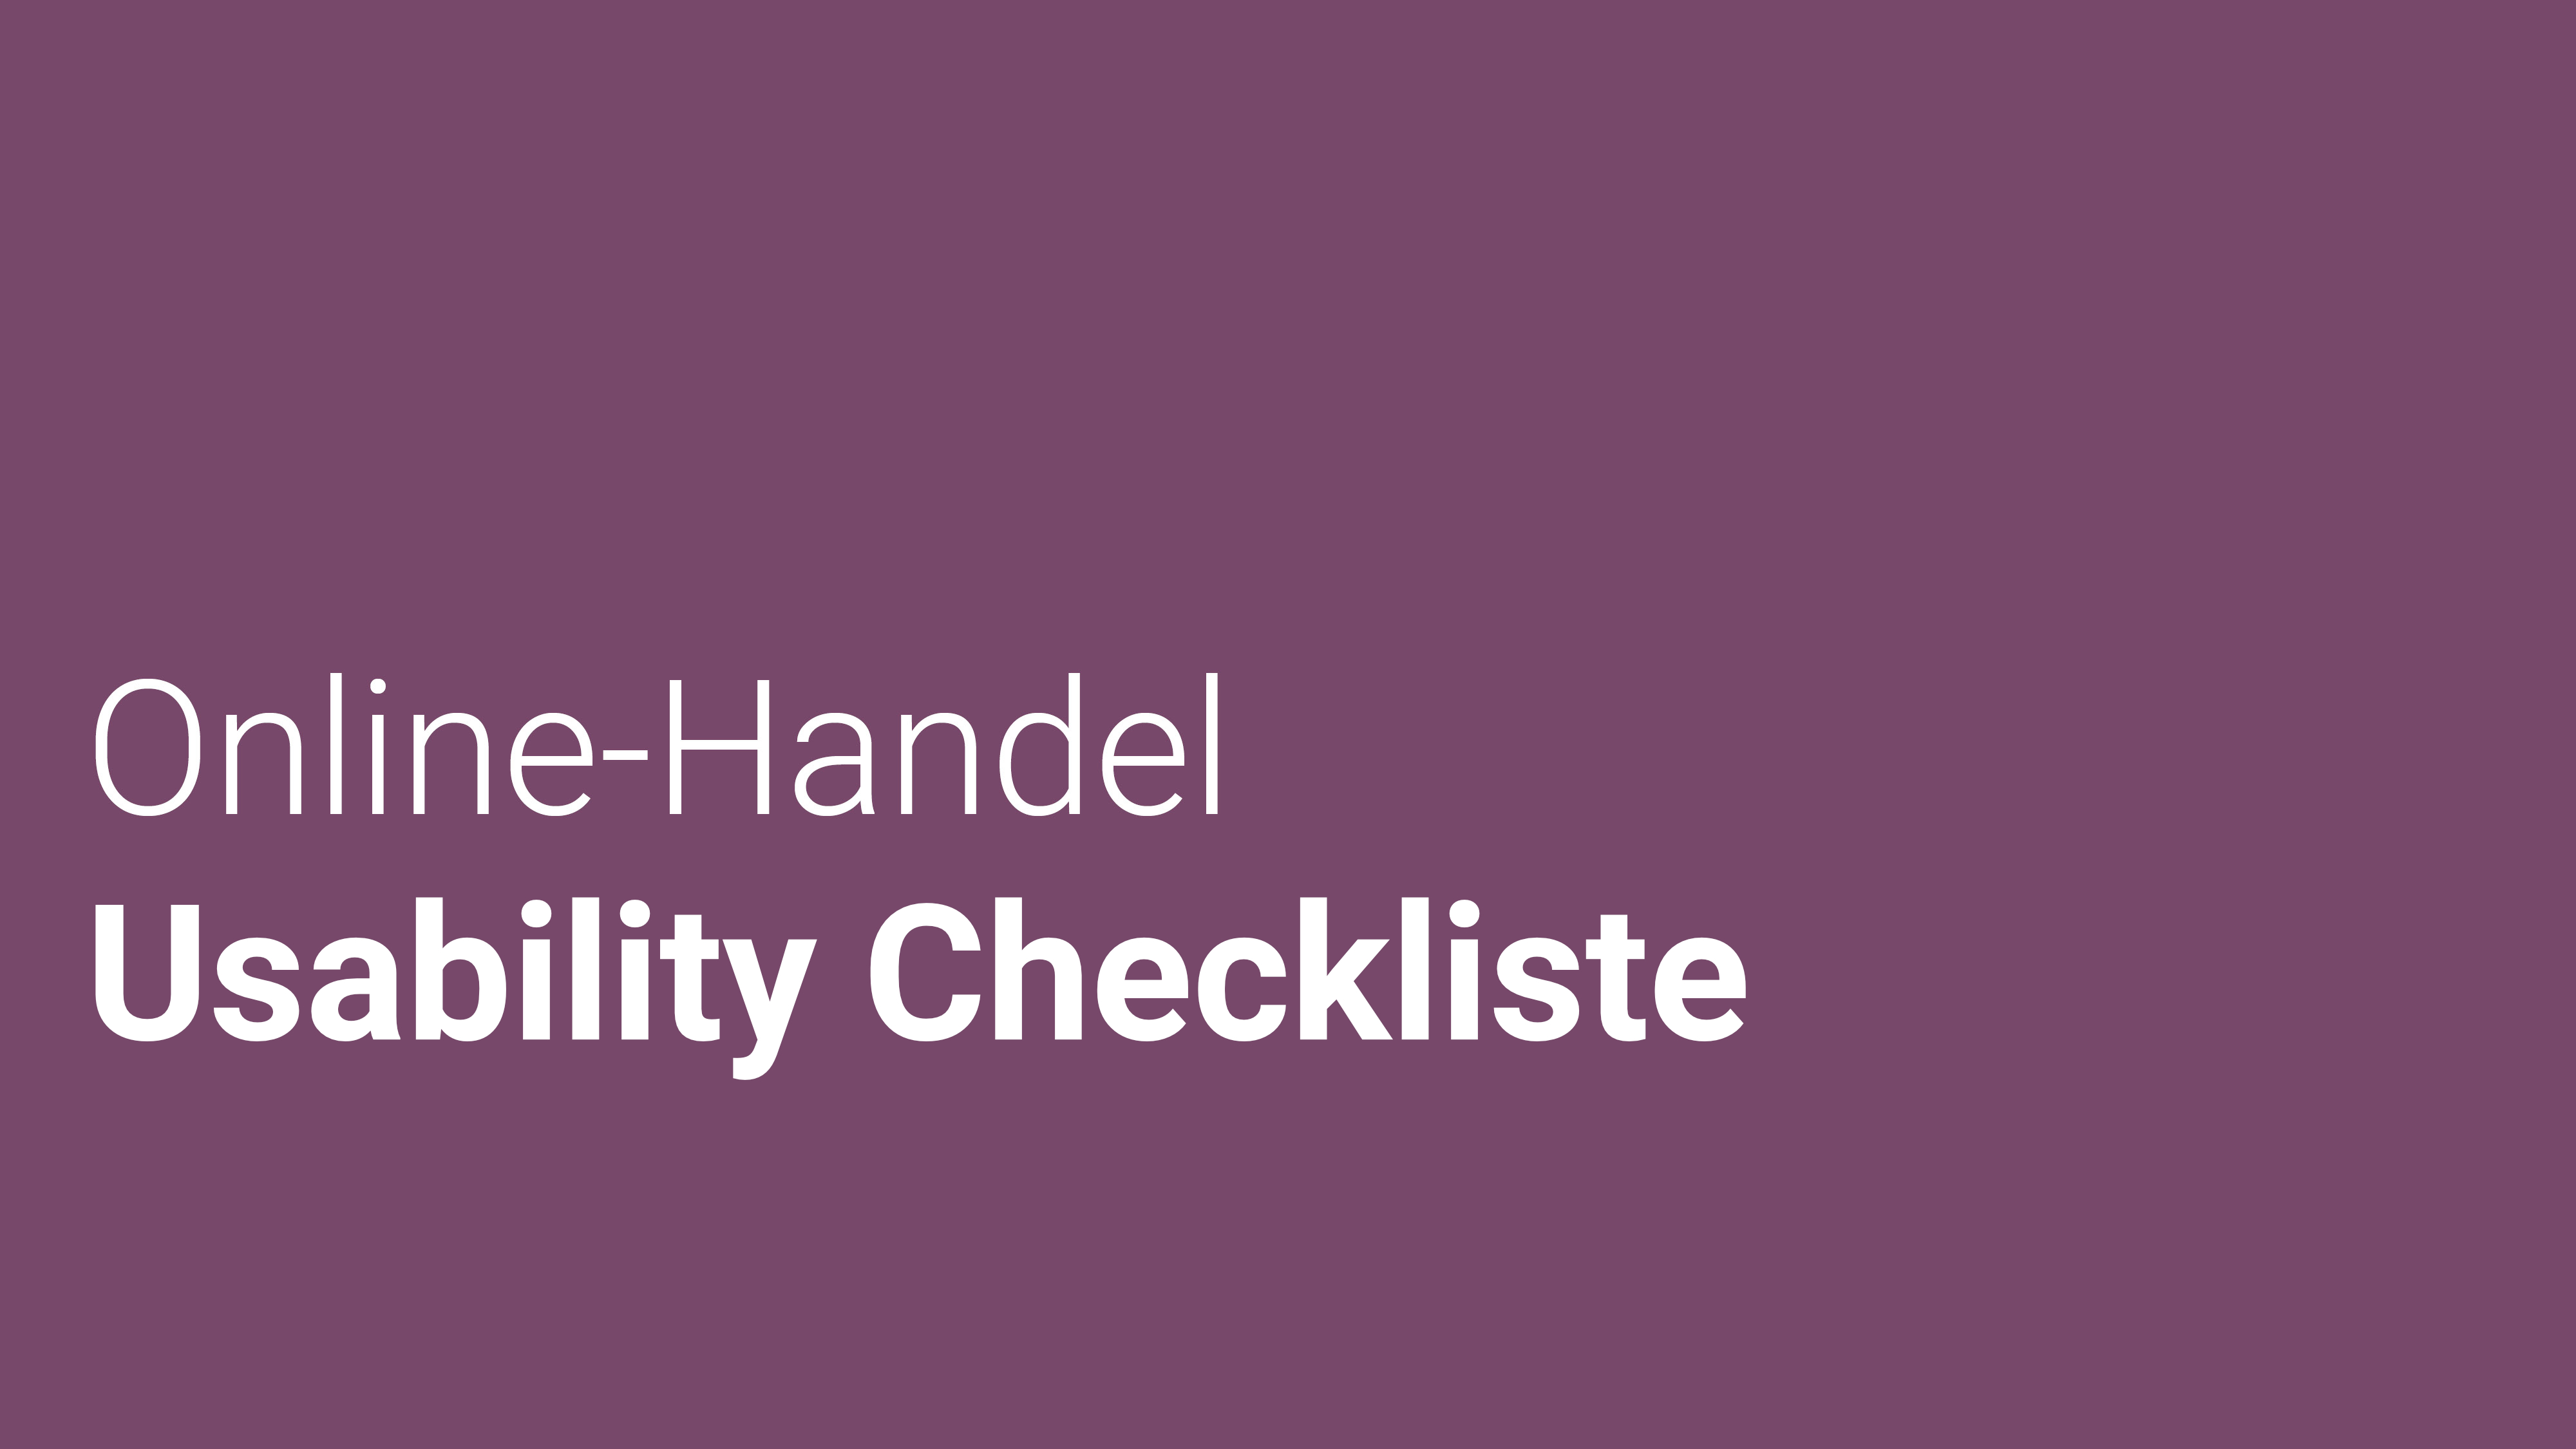 Usability Checkliste